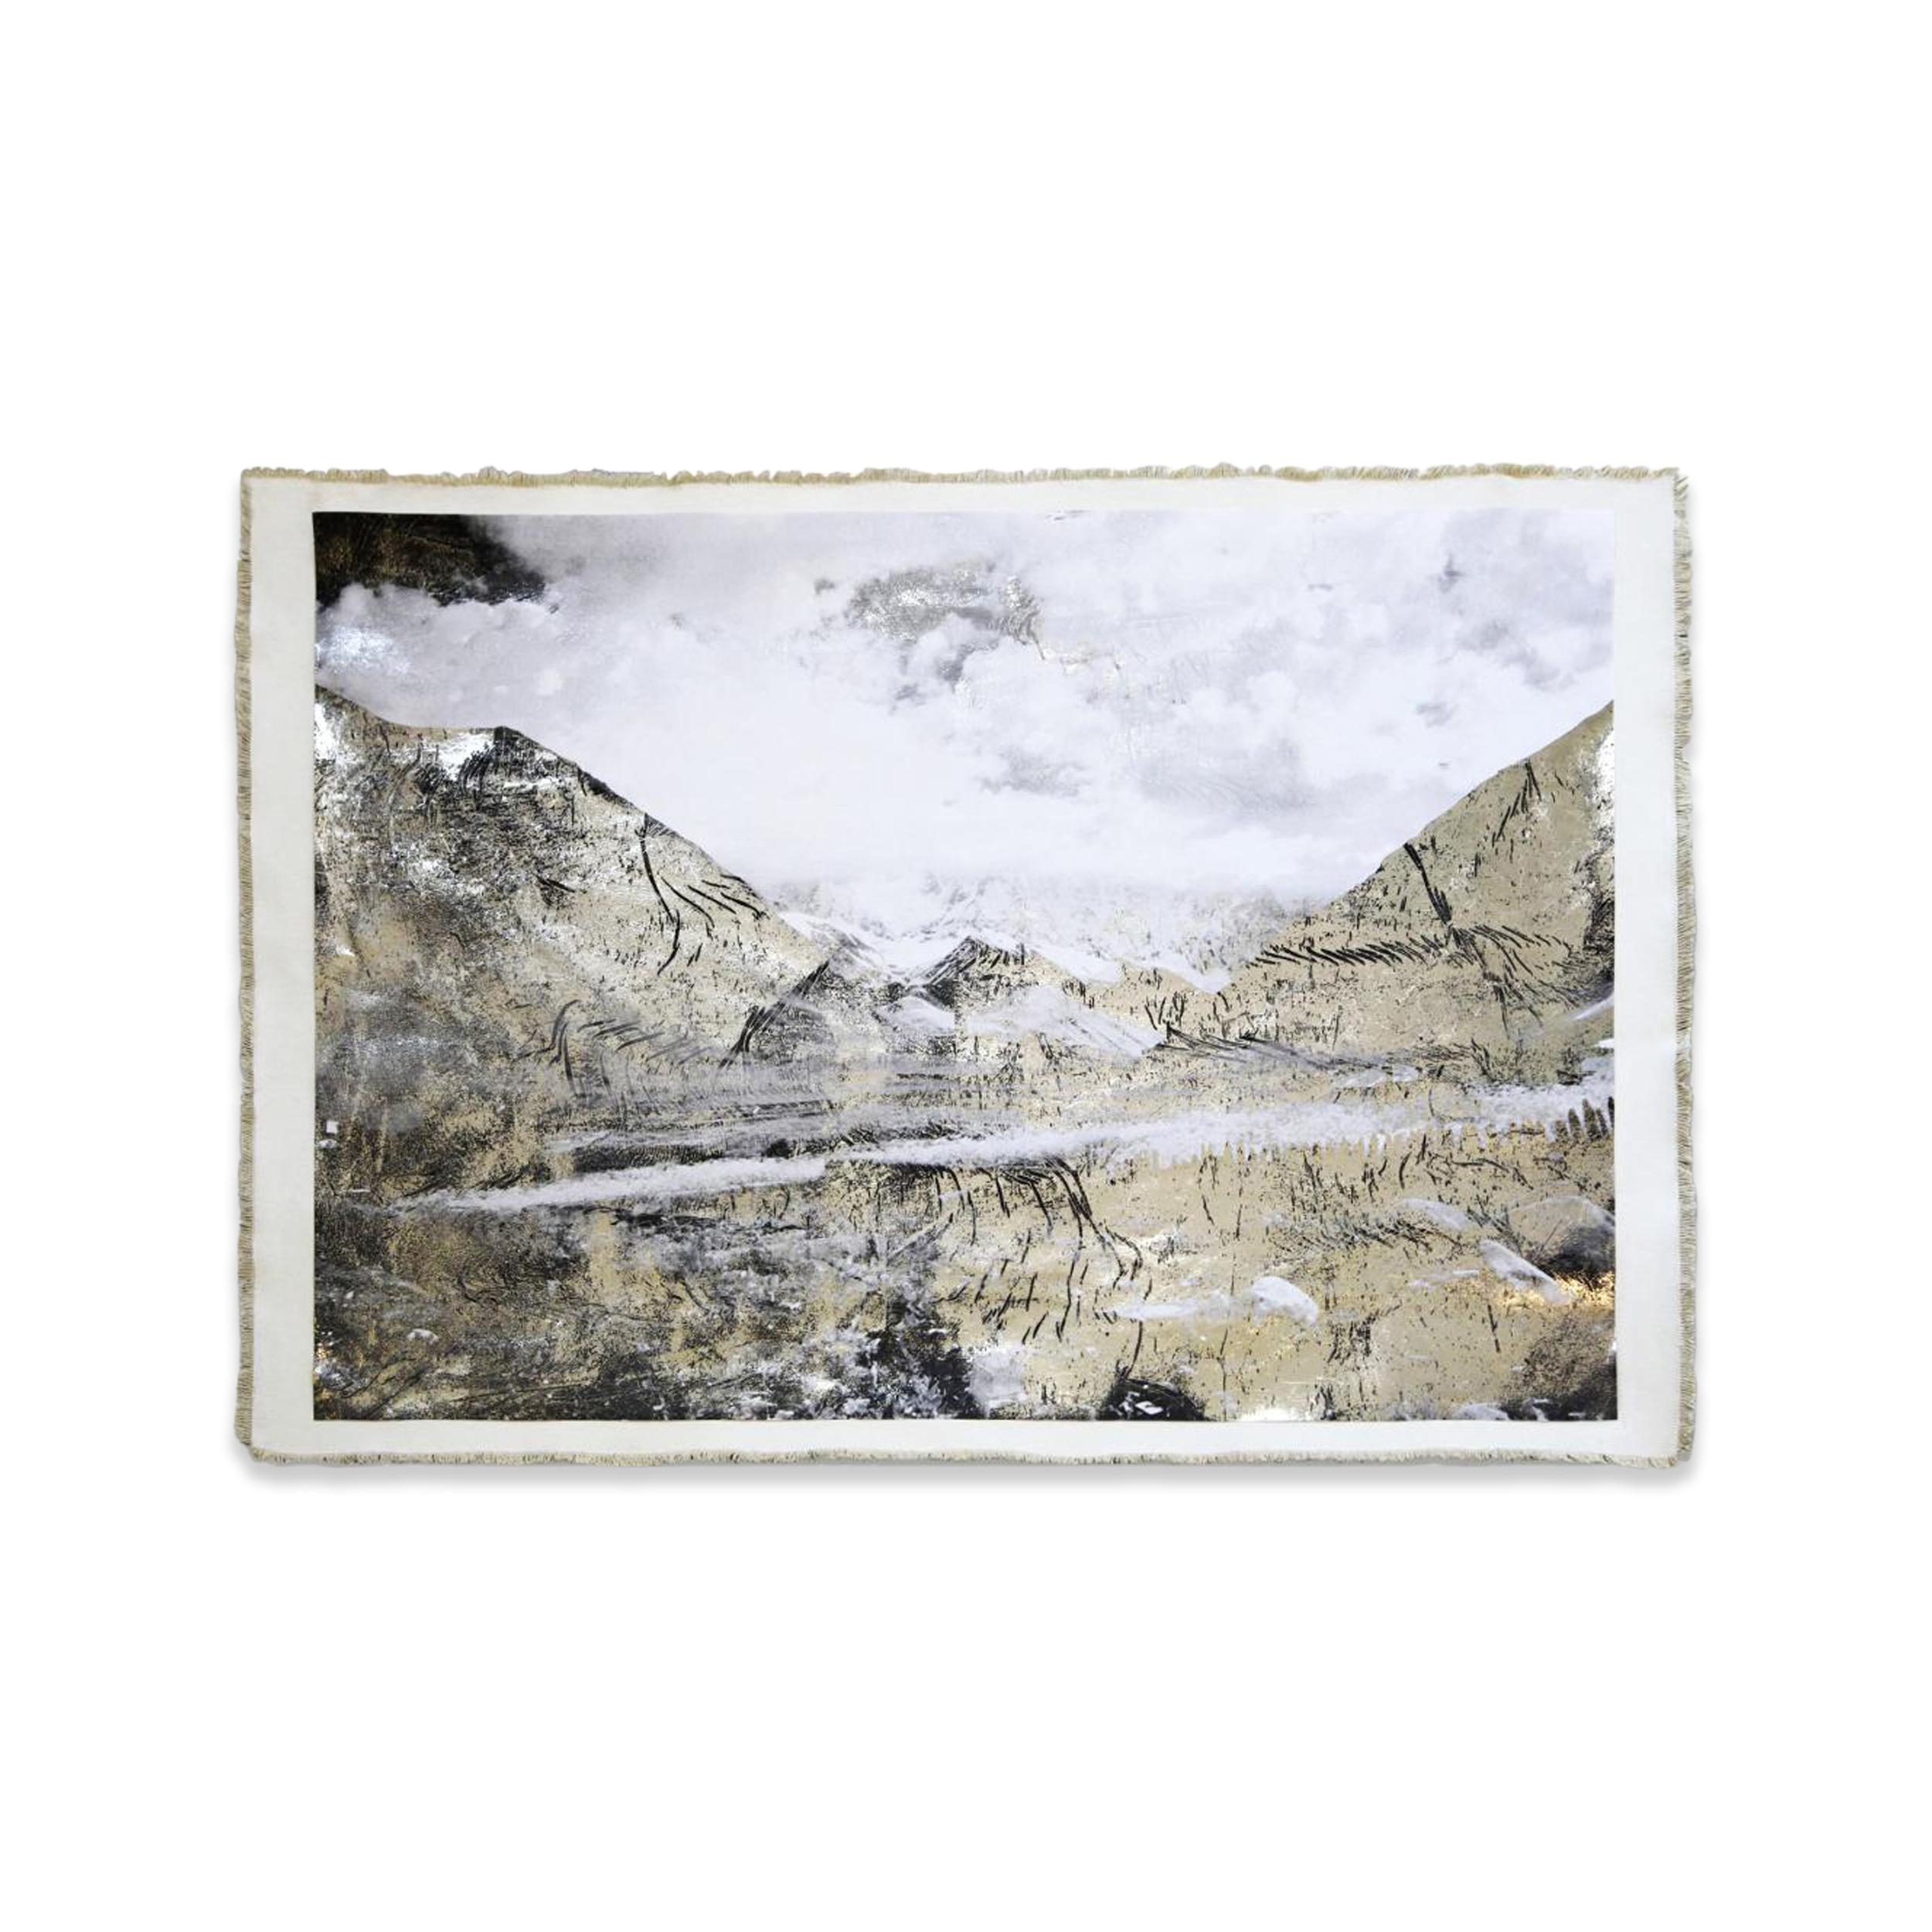 Bill Claps Landscape Painting – Ushguli mit Shakra-Berg